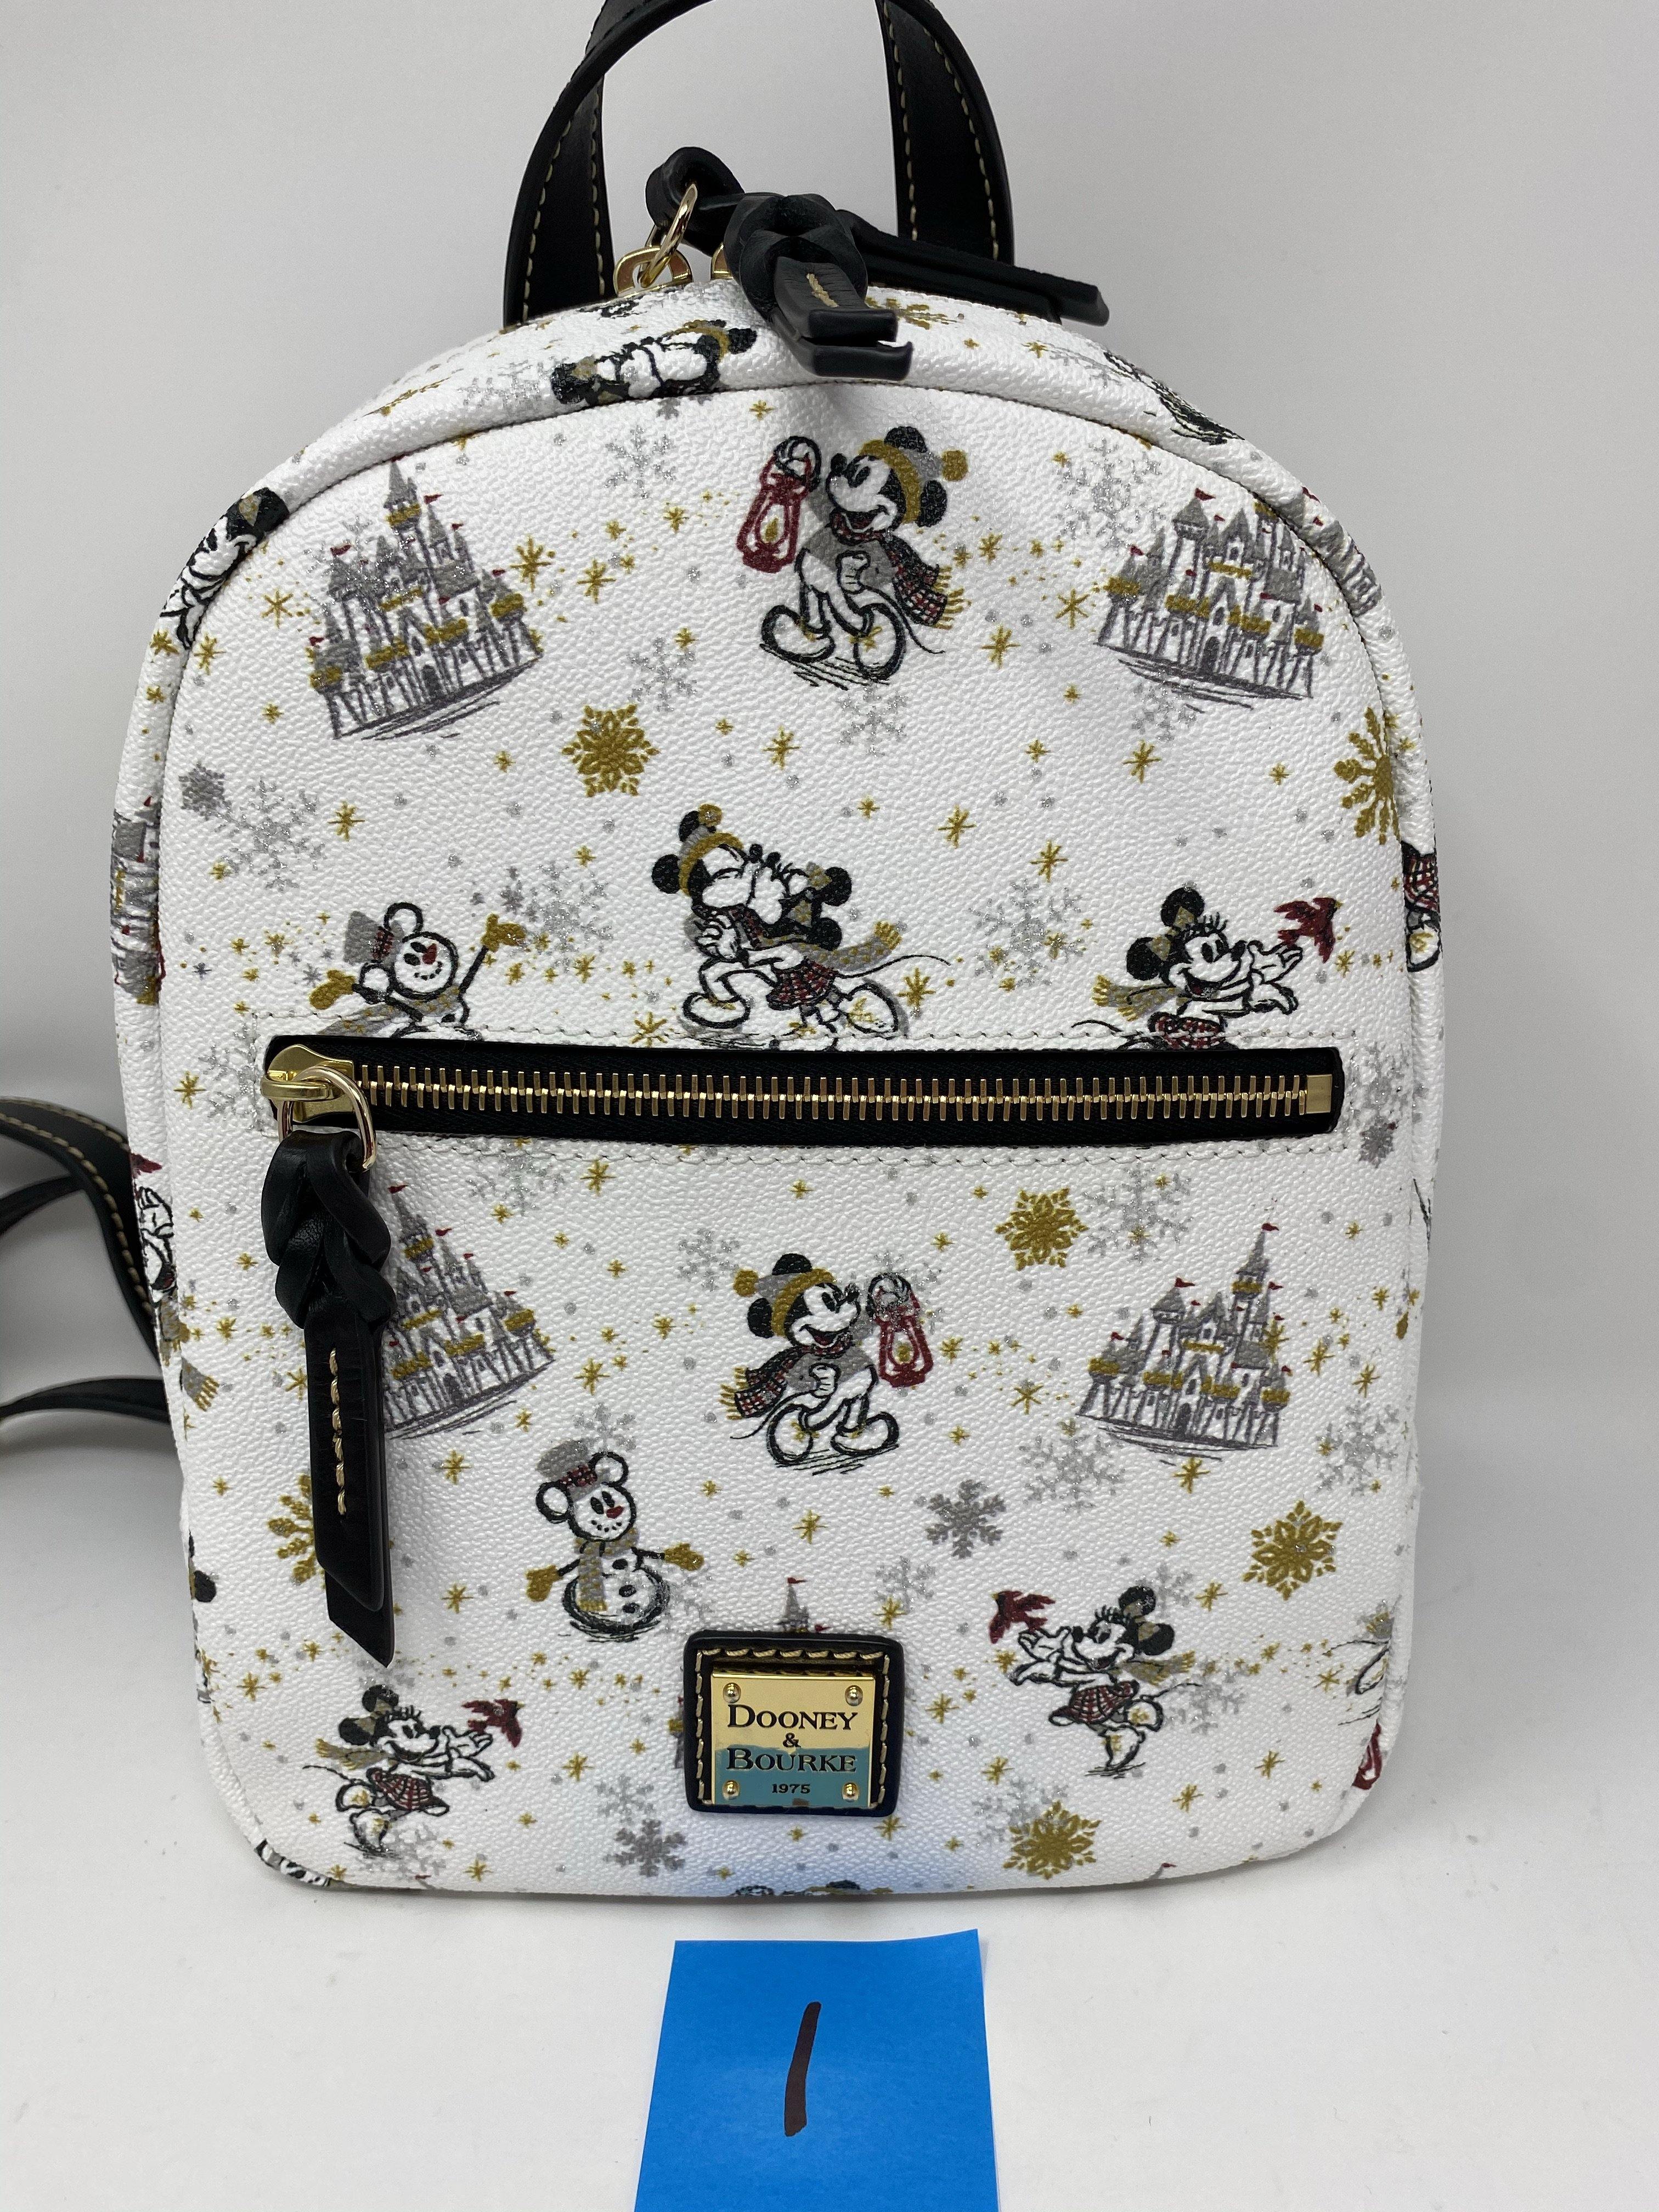 Kate Spade New York Disney x Minnie Mouse Medium Backpack | Brixton Baker